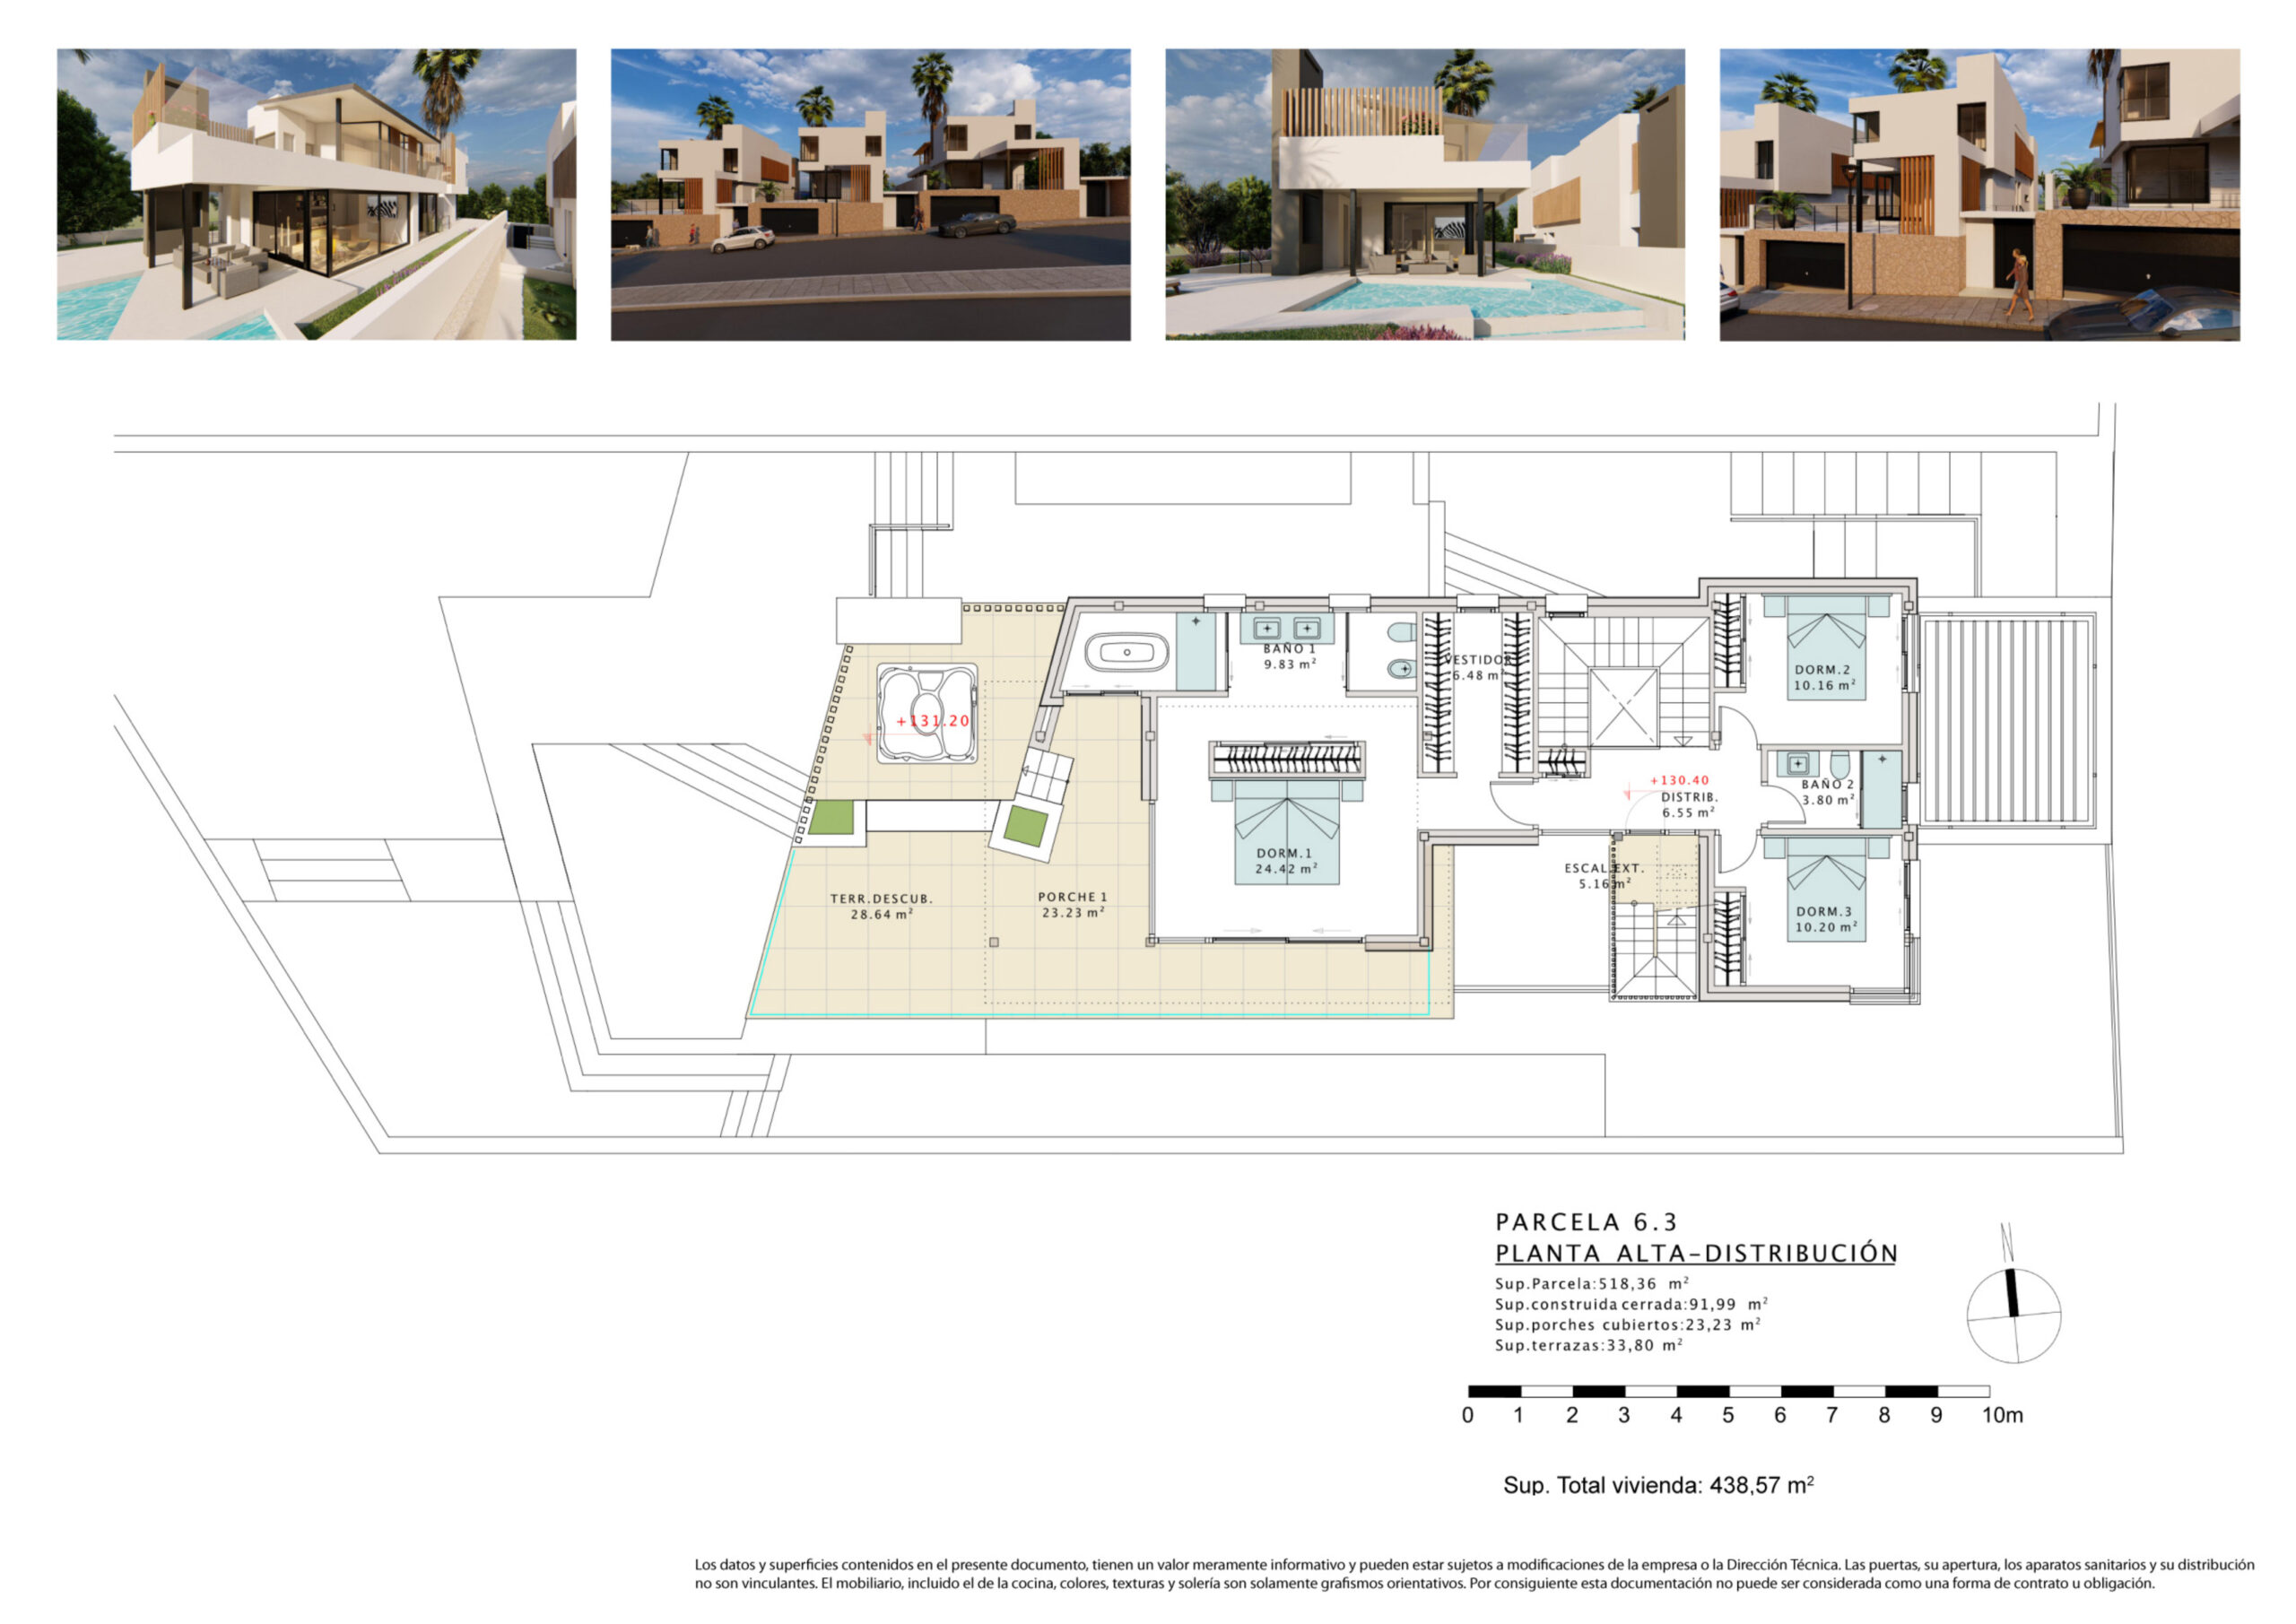 5 bedroom villa for sale in el higueron new development near malaga